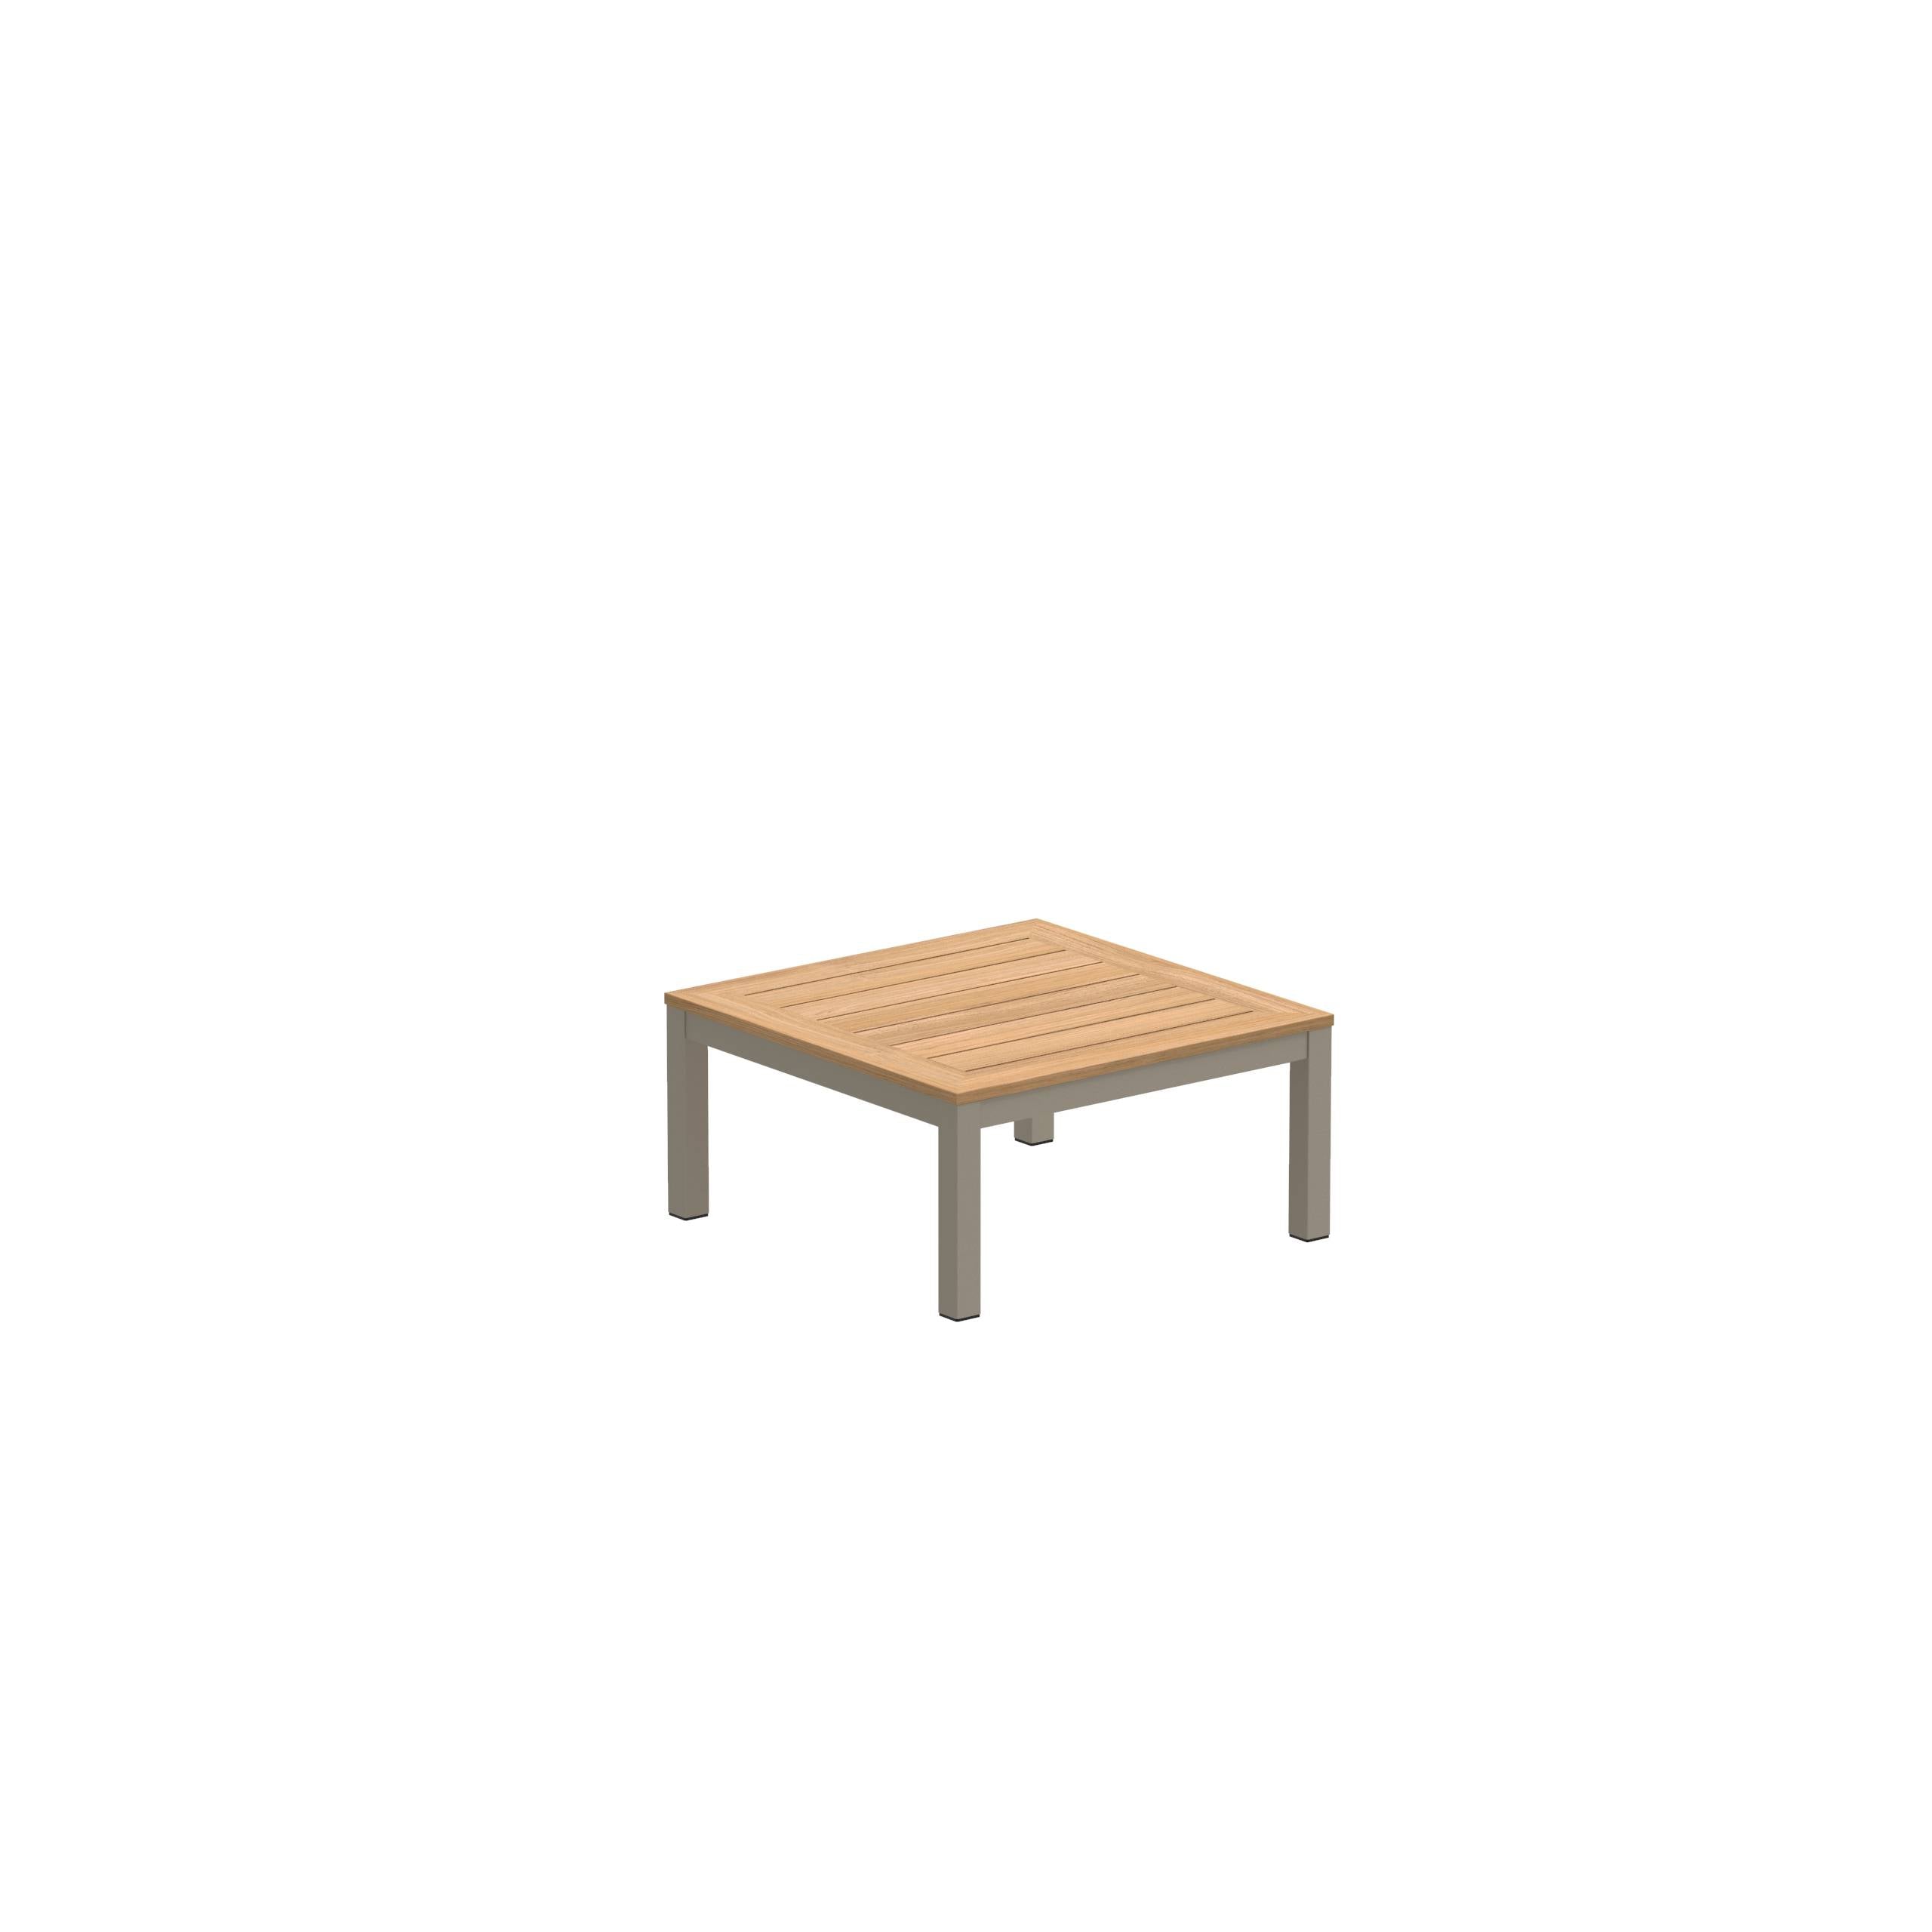 Taboela Low Table 80x80cm Sand With Teak Tabletop